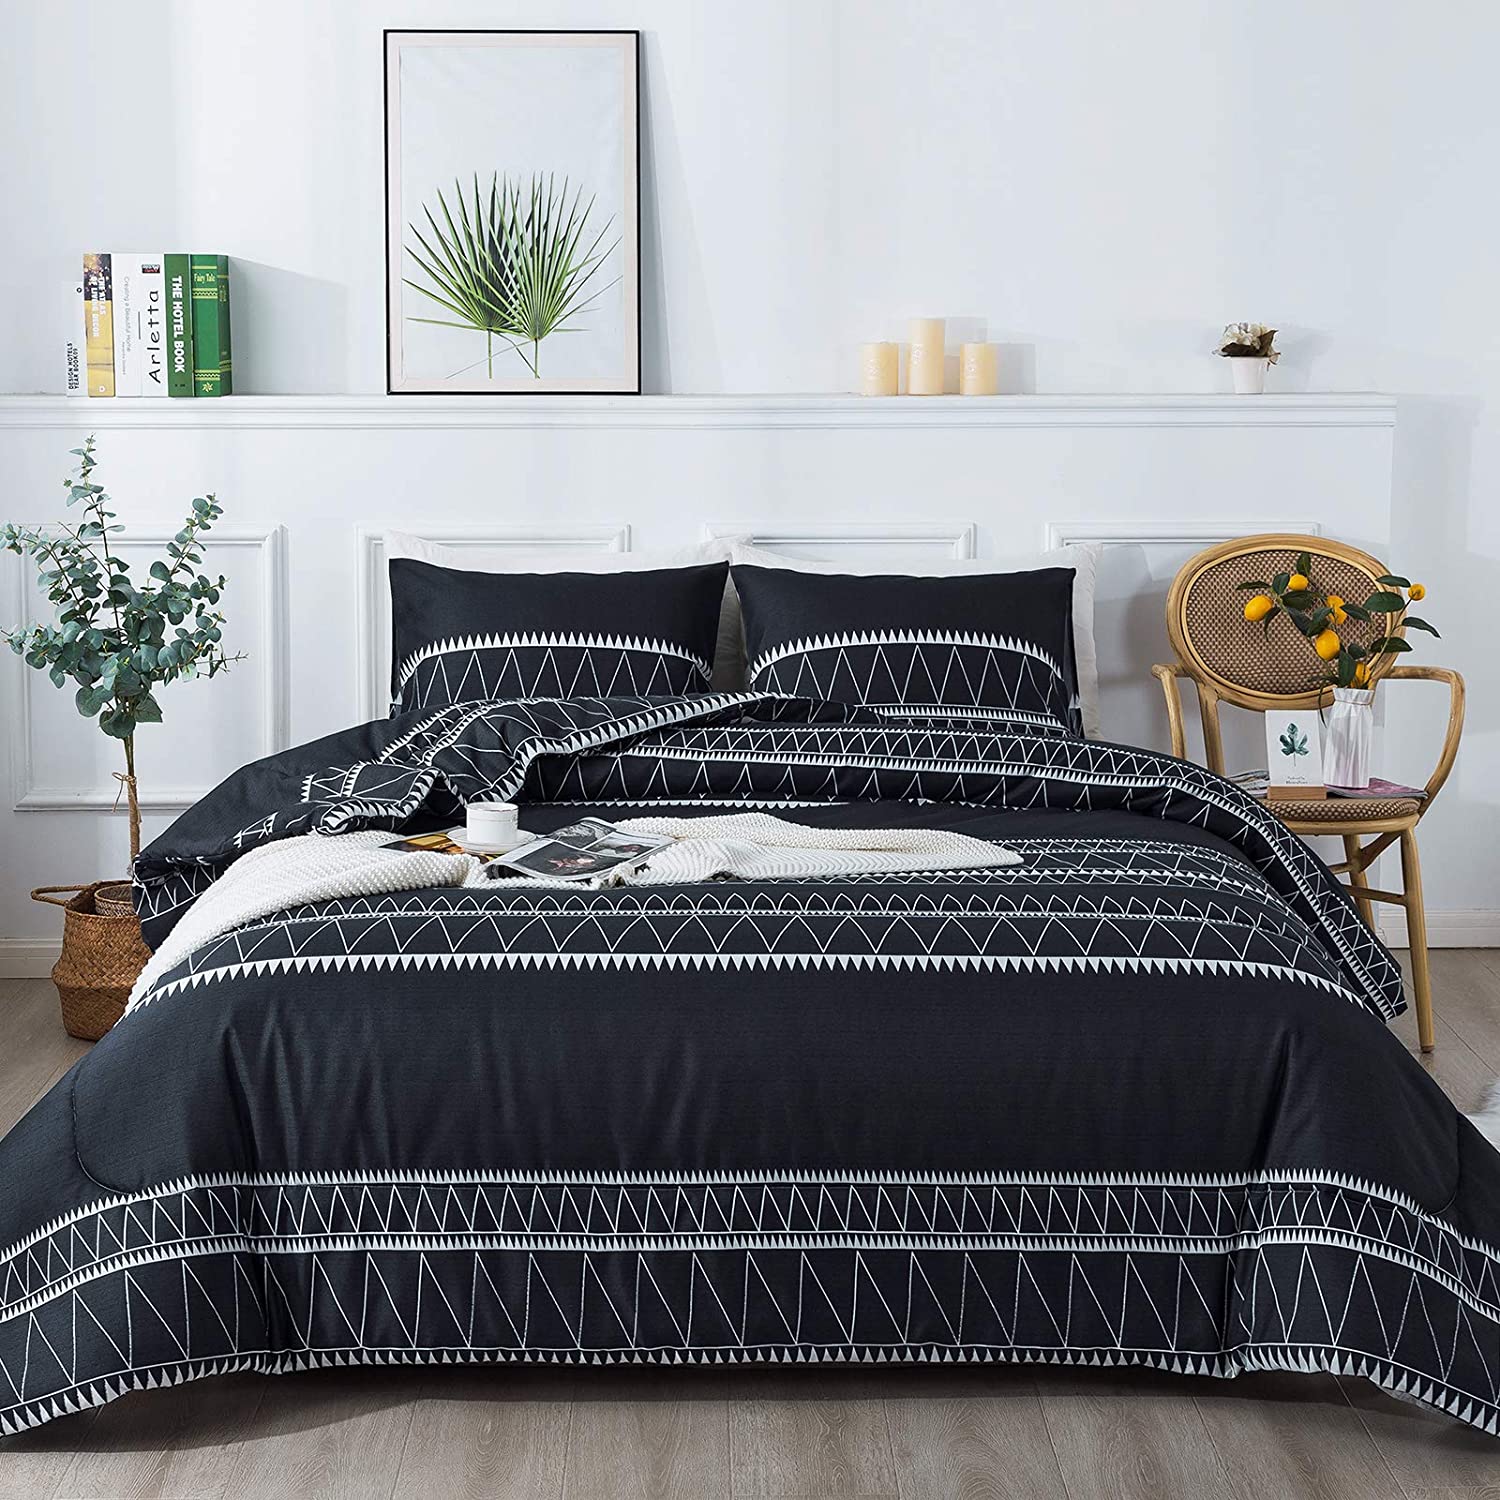 Black Boho Comforter, 3 Pieces (1 Triangle Geometric Striped Comforter+2 Pillowcases), Soft Microfiber Gray Bohemian Down Alternative Comforter Set Duvet Insert